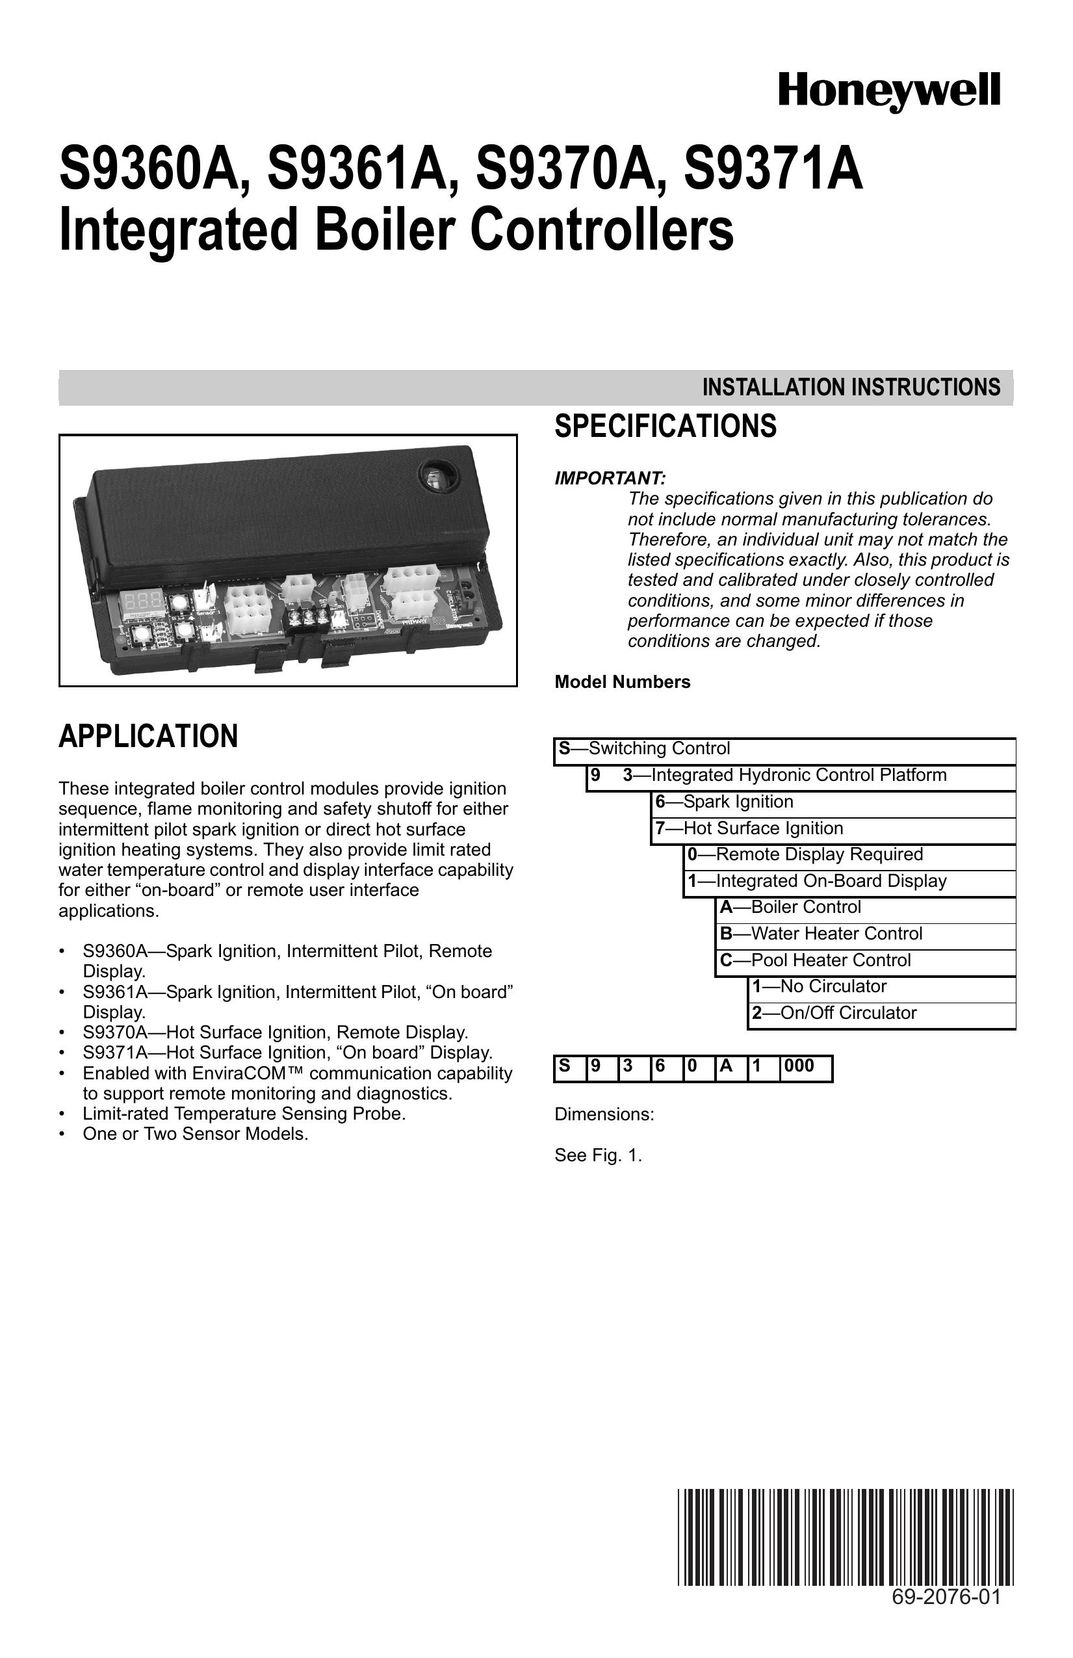 Honeywell S9360A Boiler User Manual